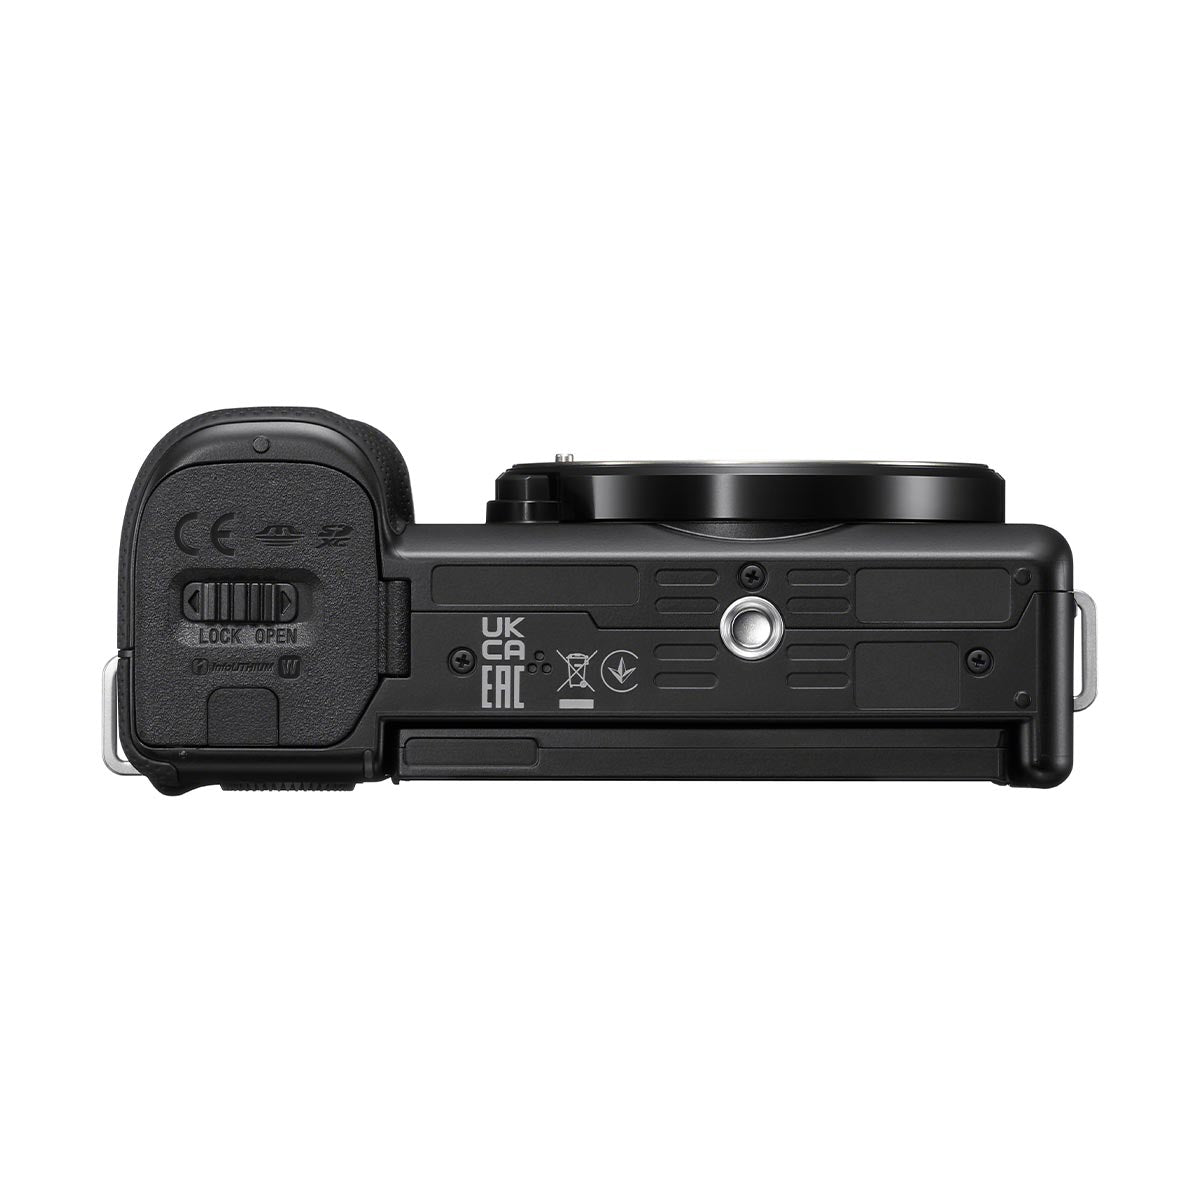 Sony Alpha ZV-E10 Mirrorless Vlog Camera with 16-50mm Lens